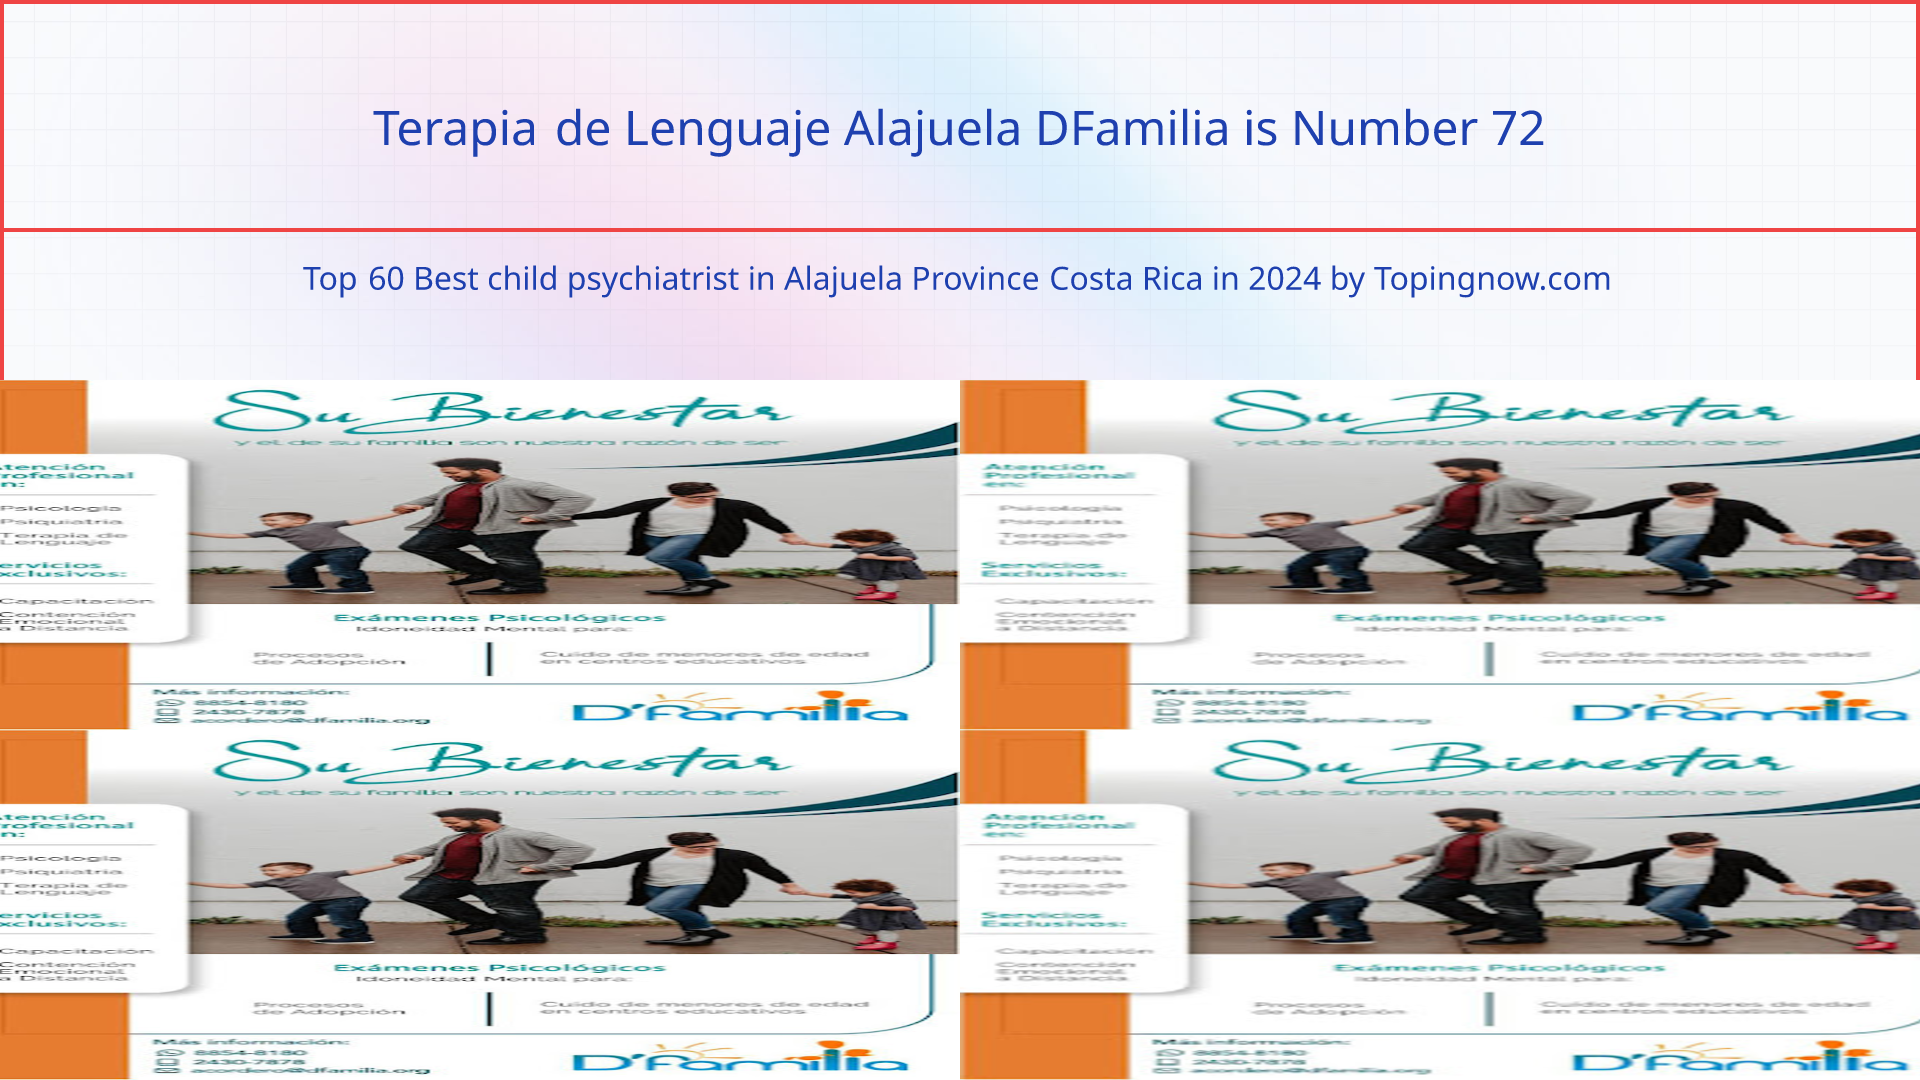 Terapia de Lenguaje Alajuela DFamilia: Top 60 Best child psychiatrist in Alajuela Province Costa Rica in 2024